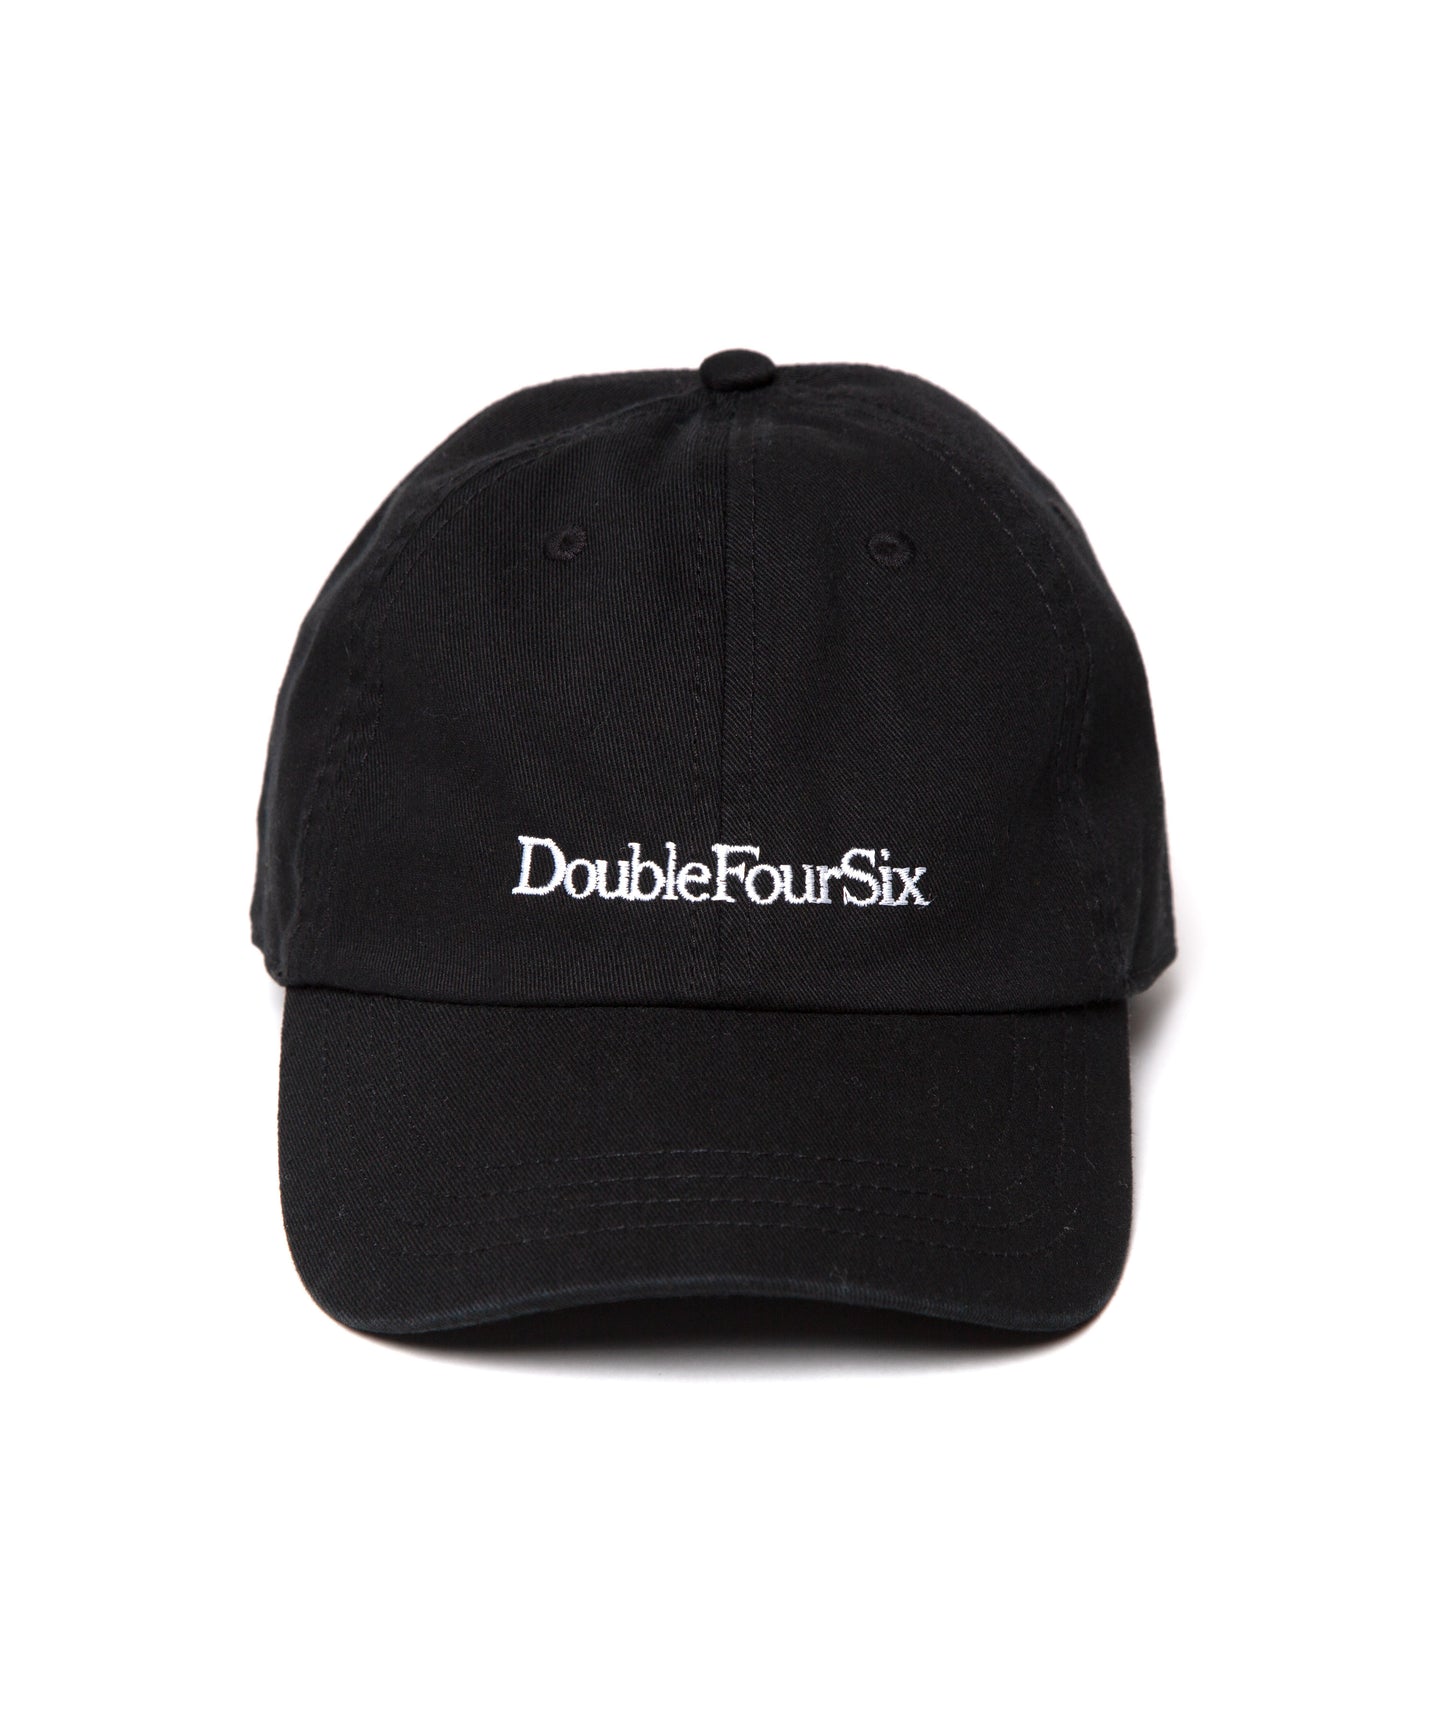 【数量限定商品】DOUBLE FOUR SIX Cursive Logo Cap Black